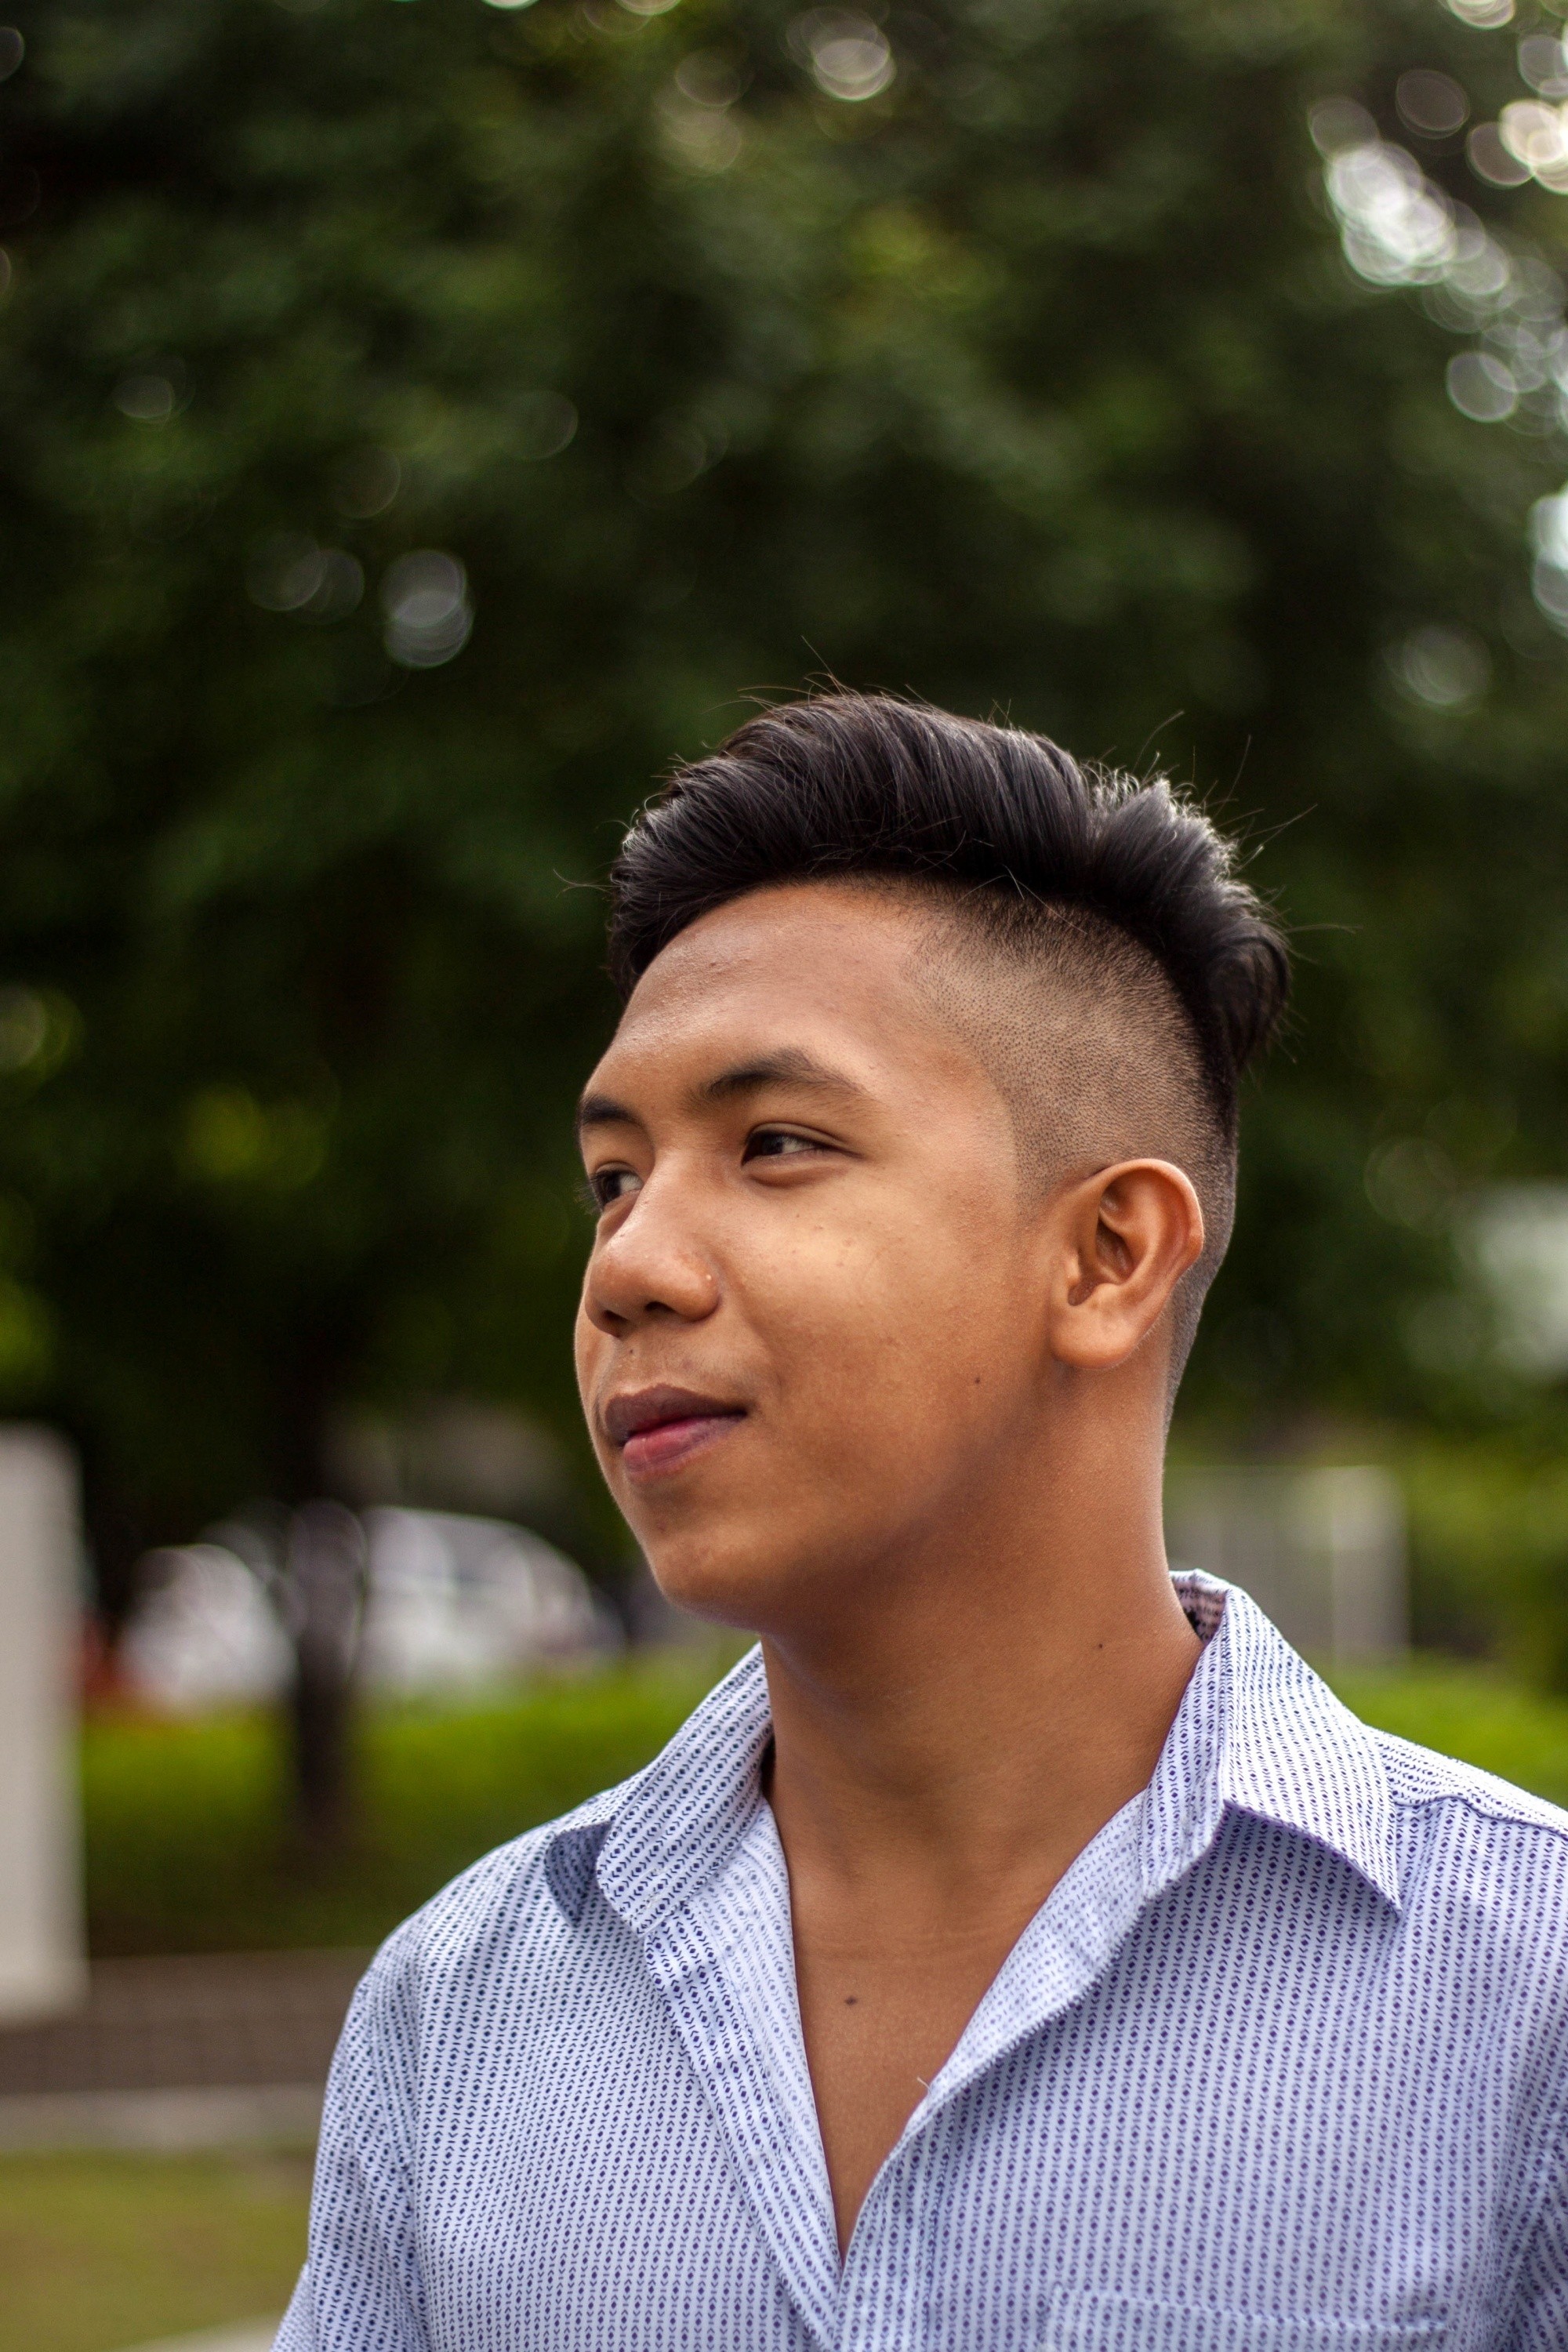 Filipino man with an undercut haircut wearing a light xanh rớt polo